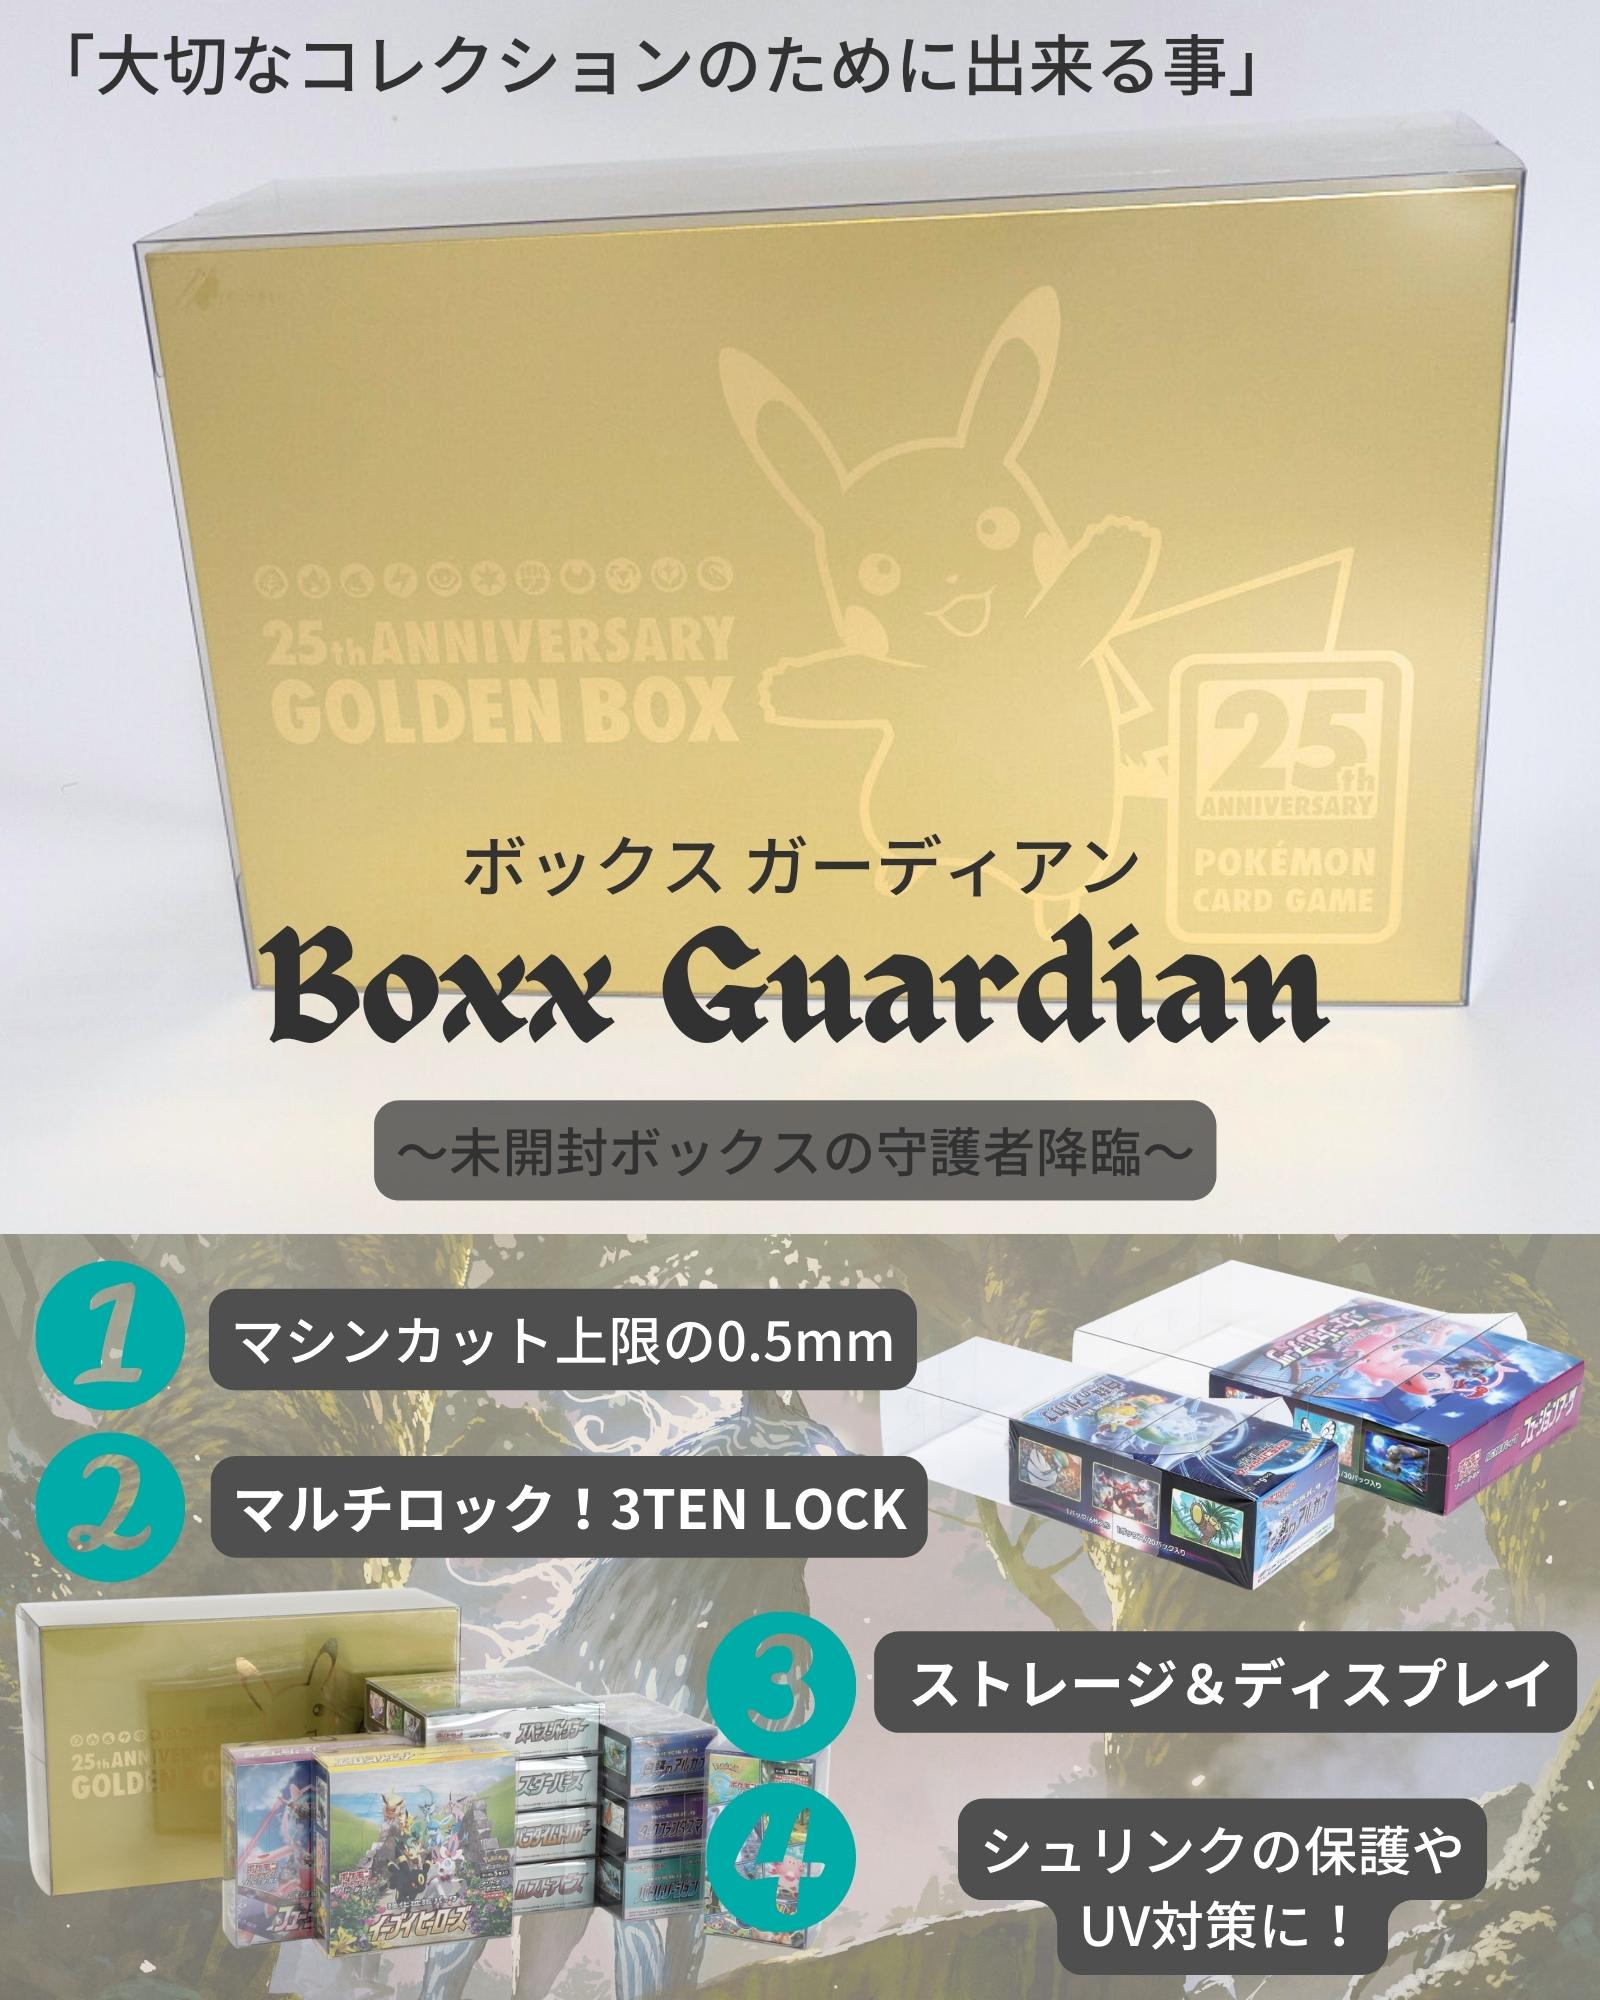 25th ANNIVERSARY GOLDEN BOX   3BOXトレーディングカード